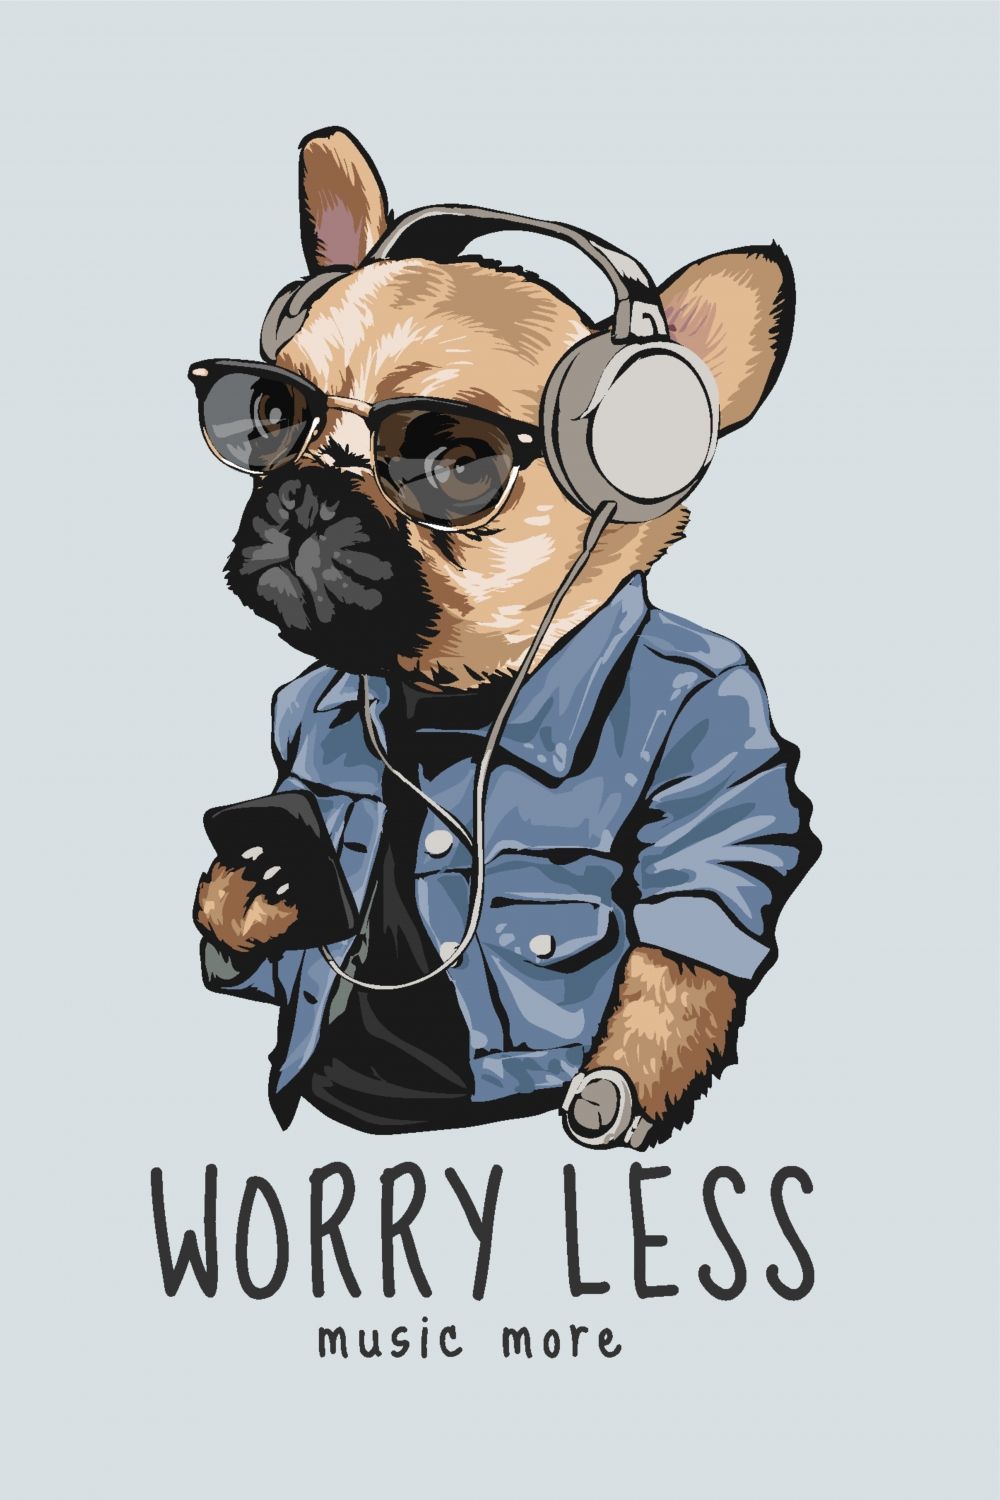 Постер "Worry Less" от Интернет магазина Милота